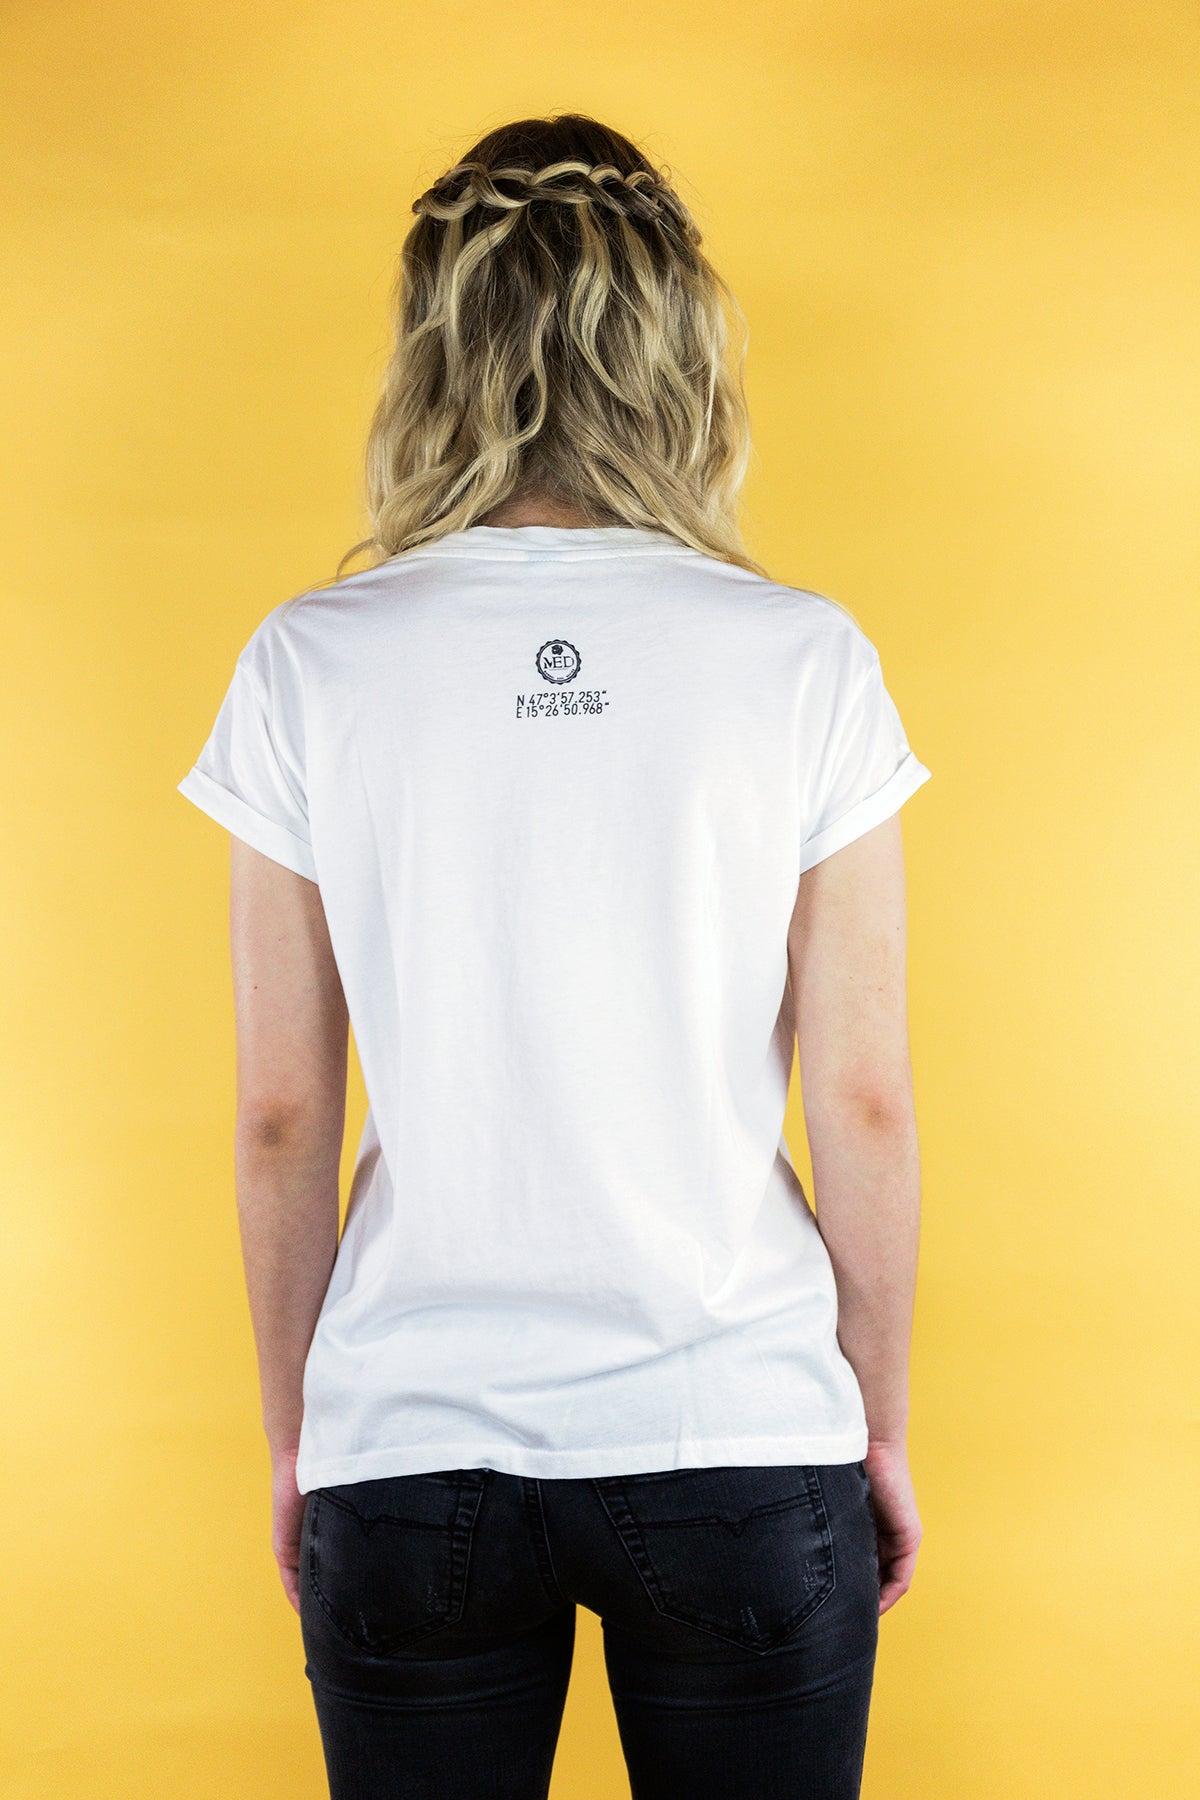 T-Shirt "ROSES PRINT" - white - Manuel Essl Design